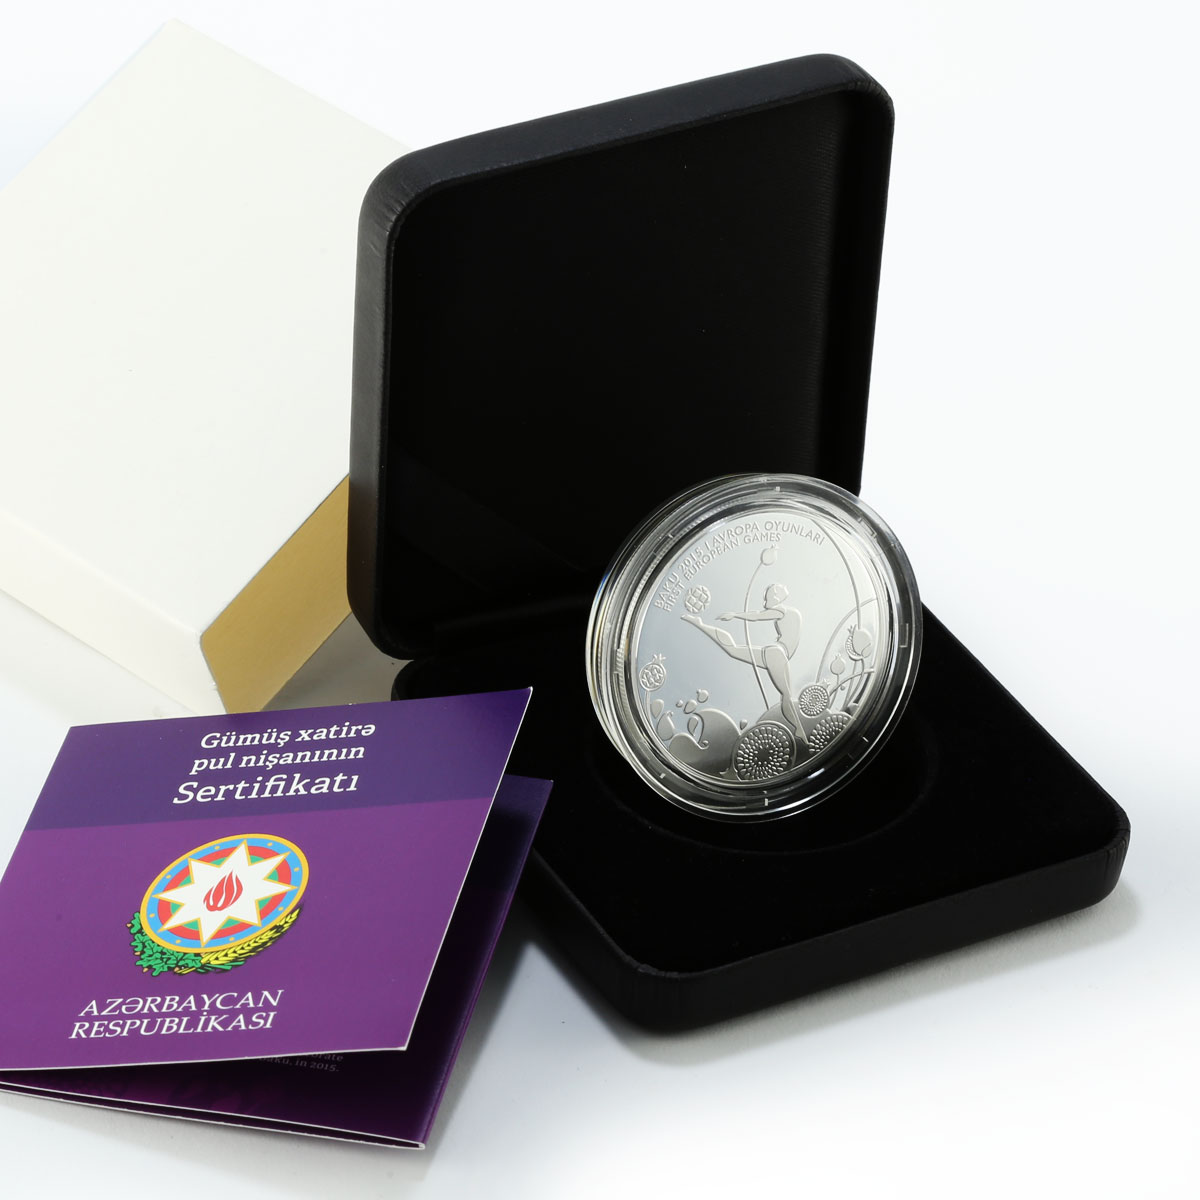 Azerbaijan 5 manat European Games in Baku Rhythmic Gymnastics silver coin 2015